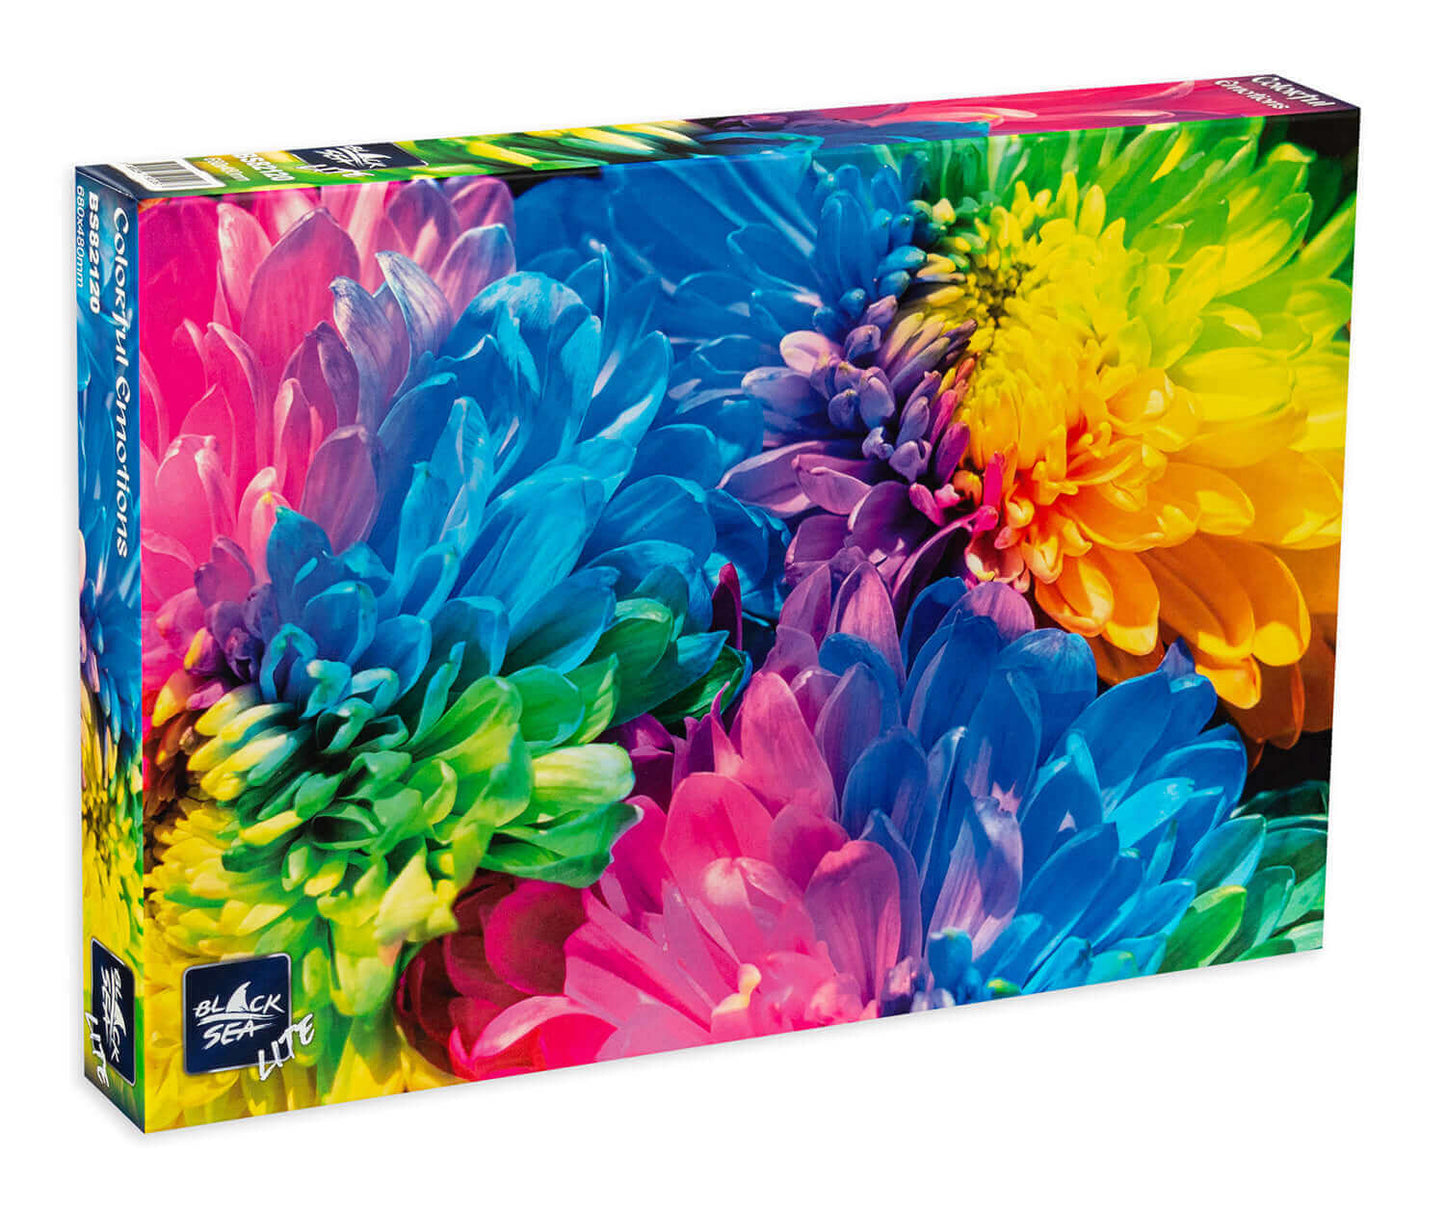 Puzzle Black Sea 1000 pieces - Colorful Emotions, -